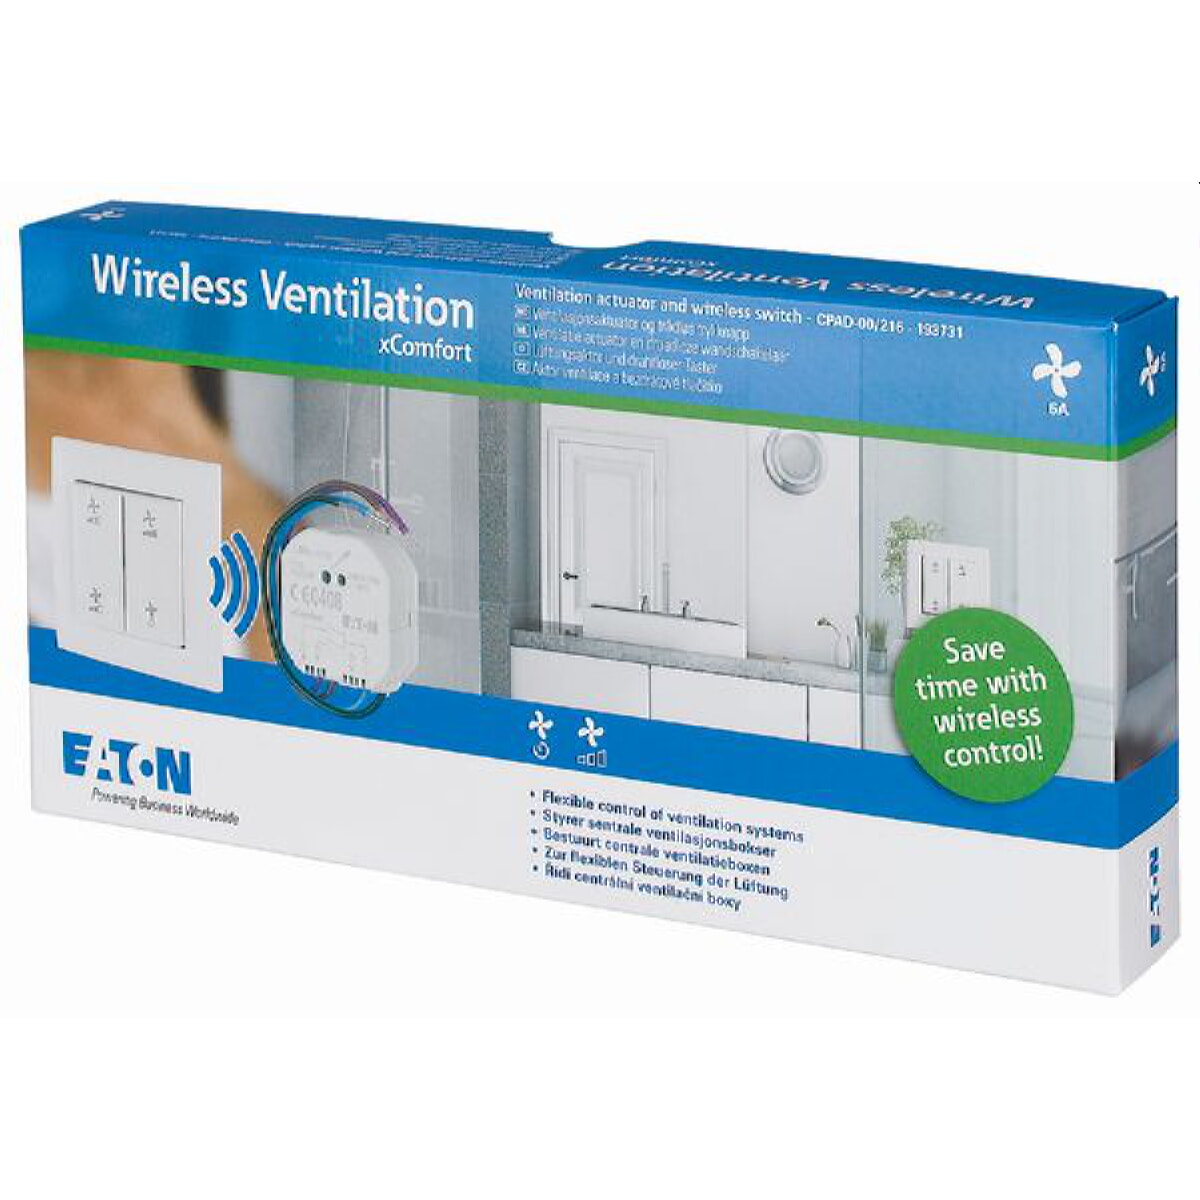 Eaton Electric Aktionspaket CPAD-00/216 Wireless Ventilation